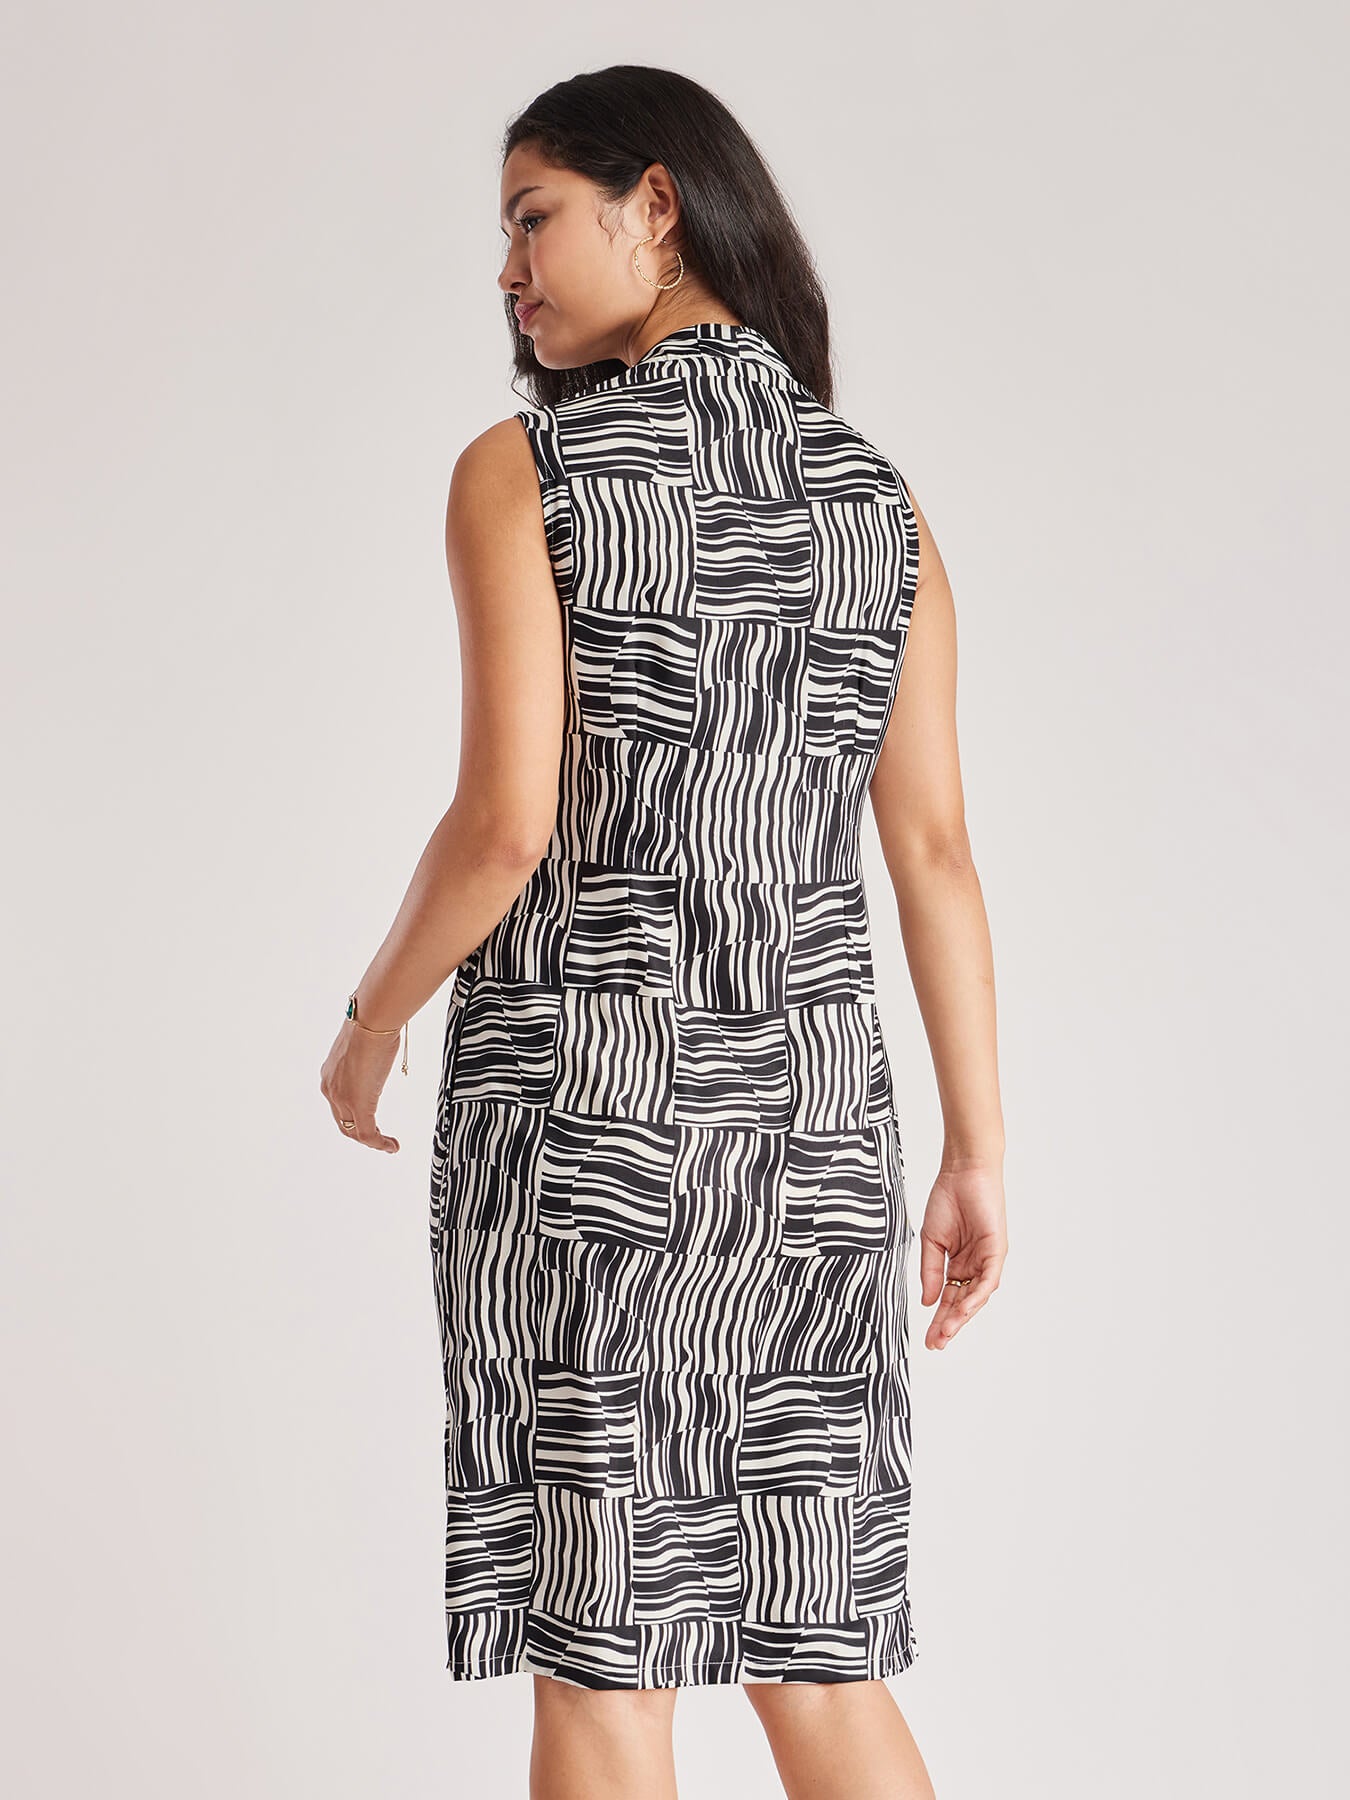 Geometric Sleeveless Dress - Black And Off White